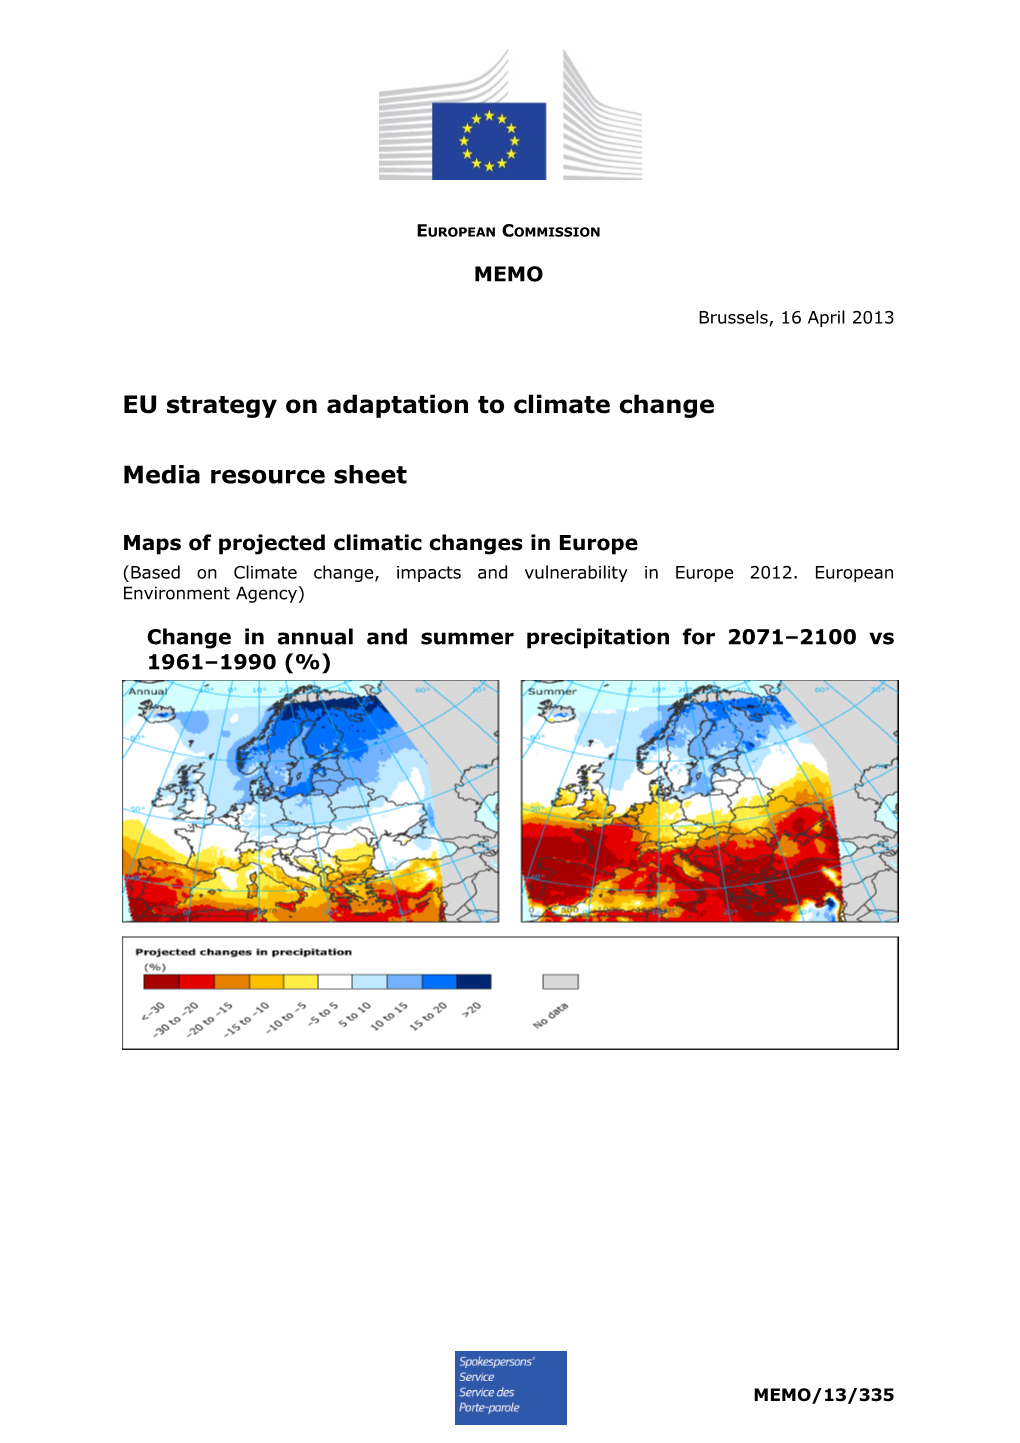 EU Strategy on Adaptation to Climate Change